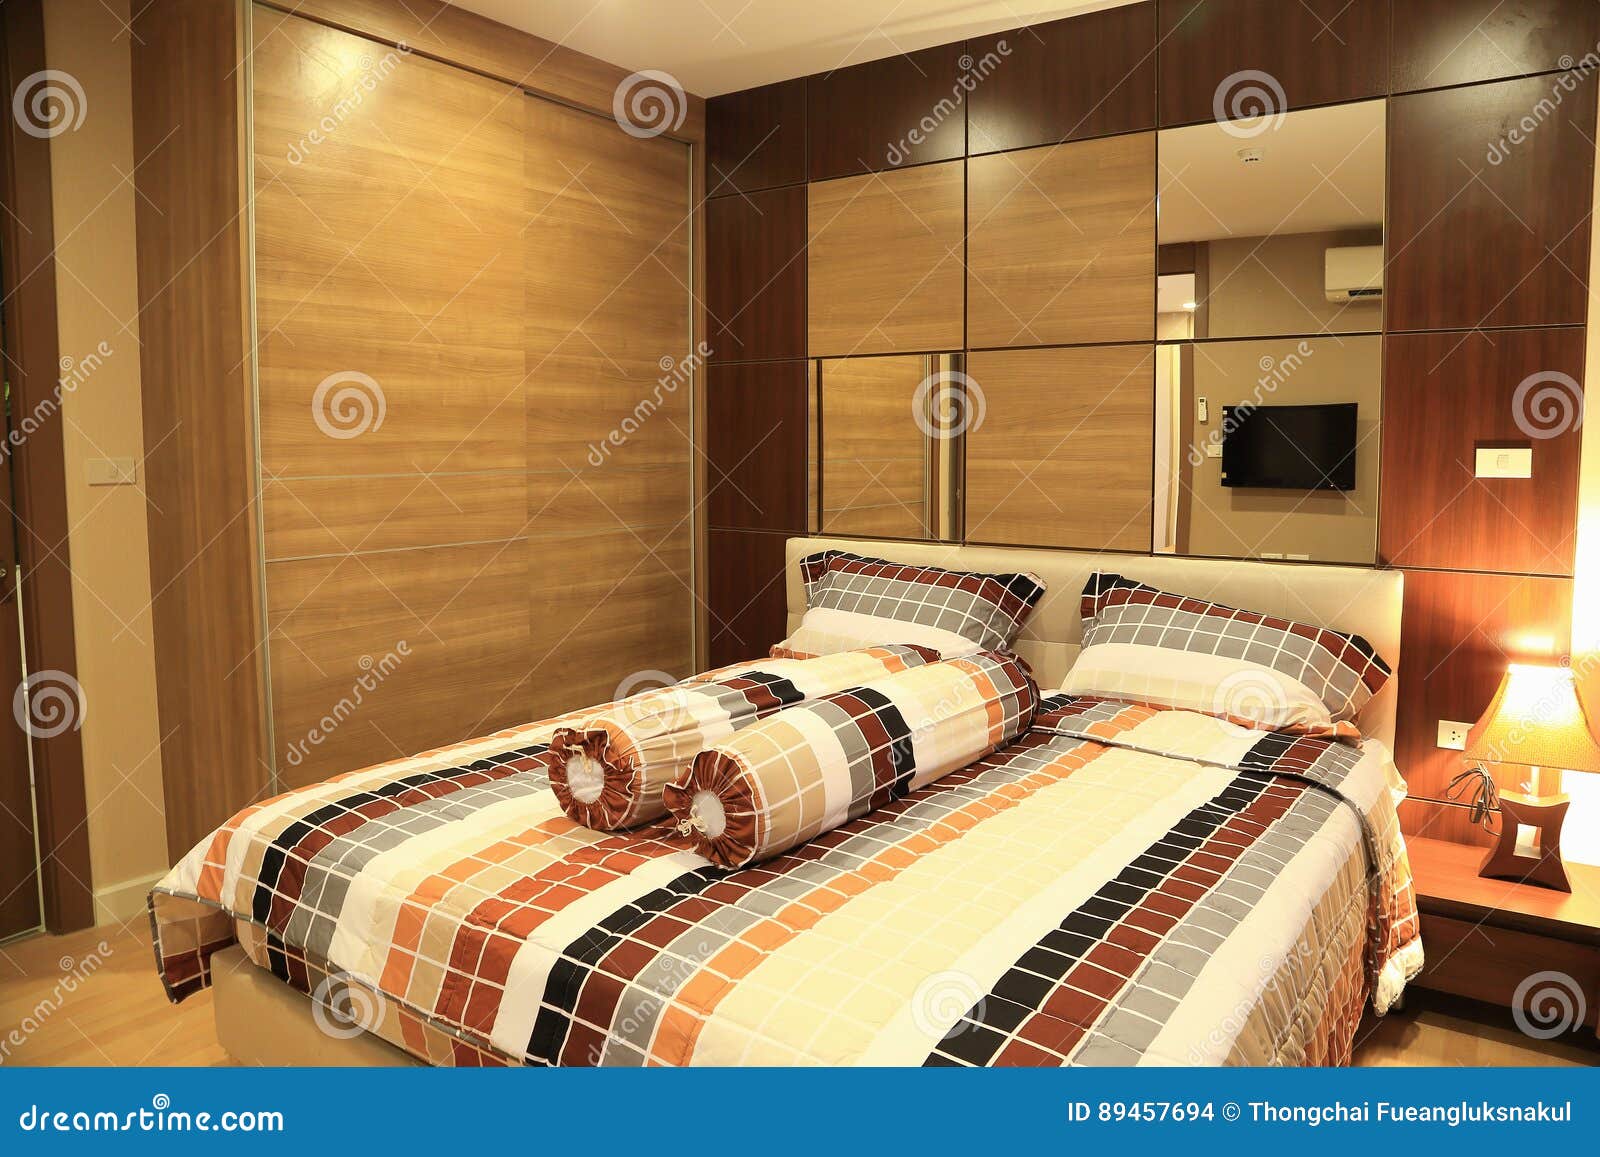 Warm Tone Of Luxury Interiors Design Of The Bedroom In